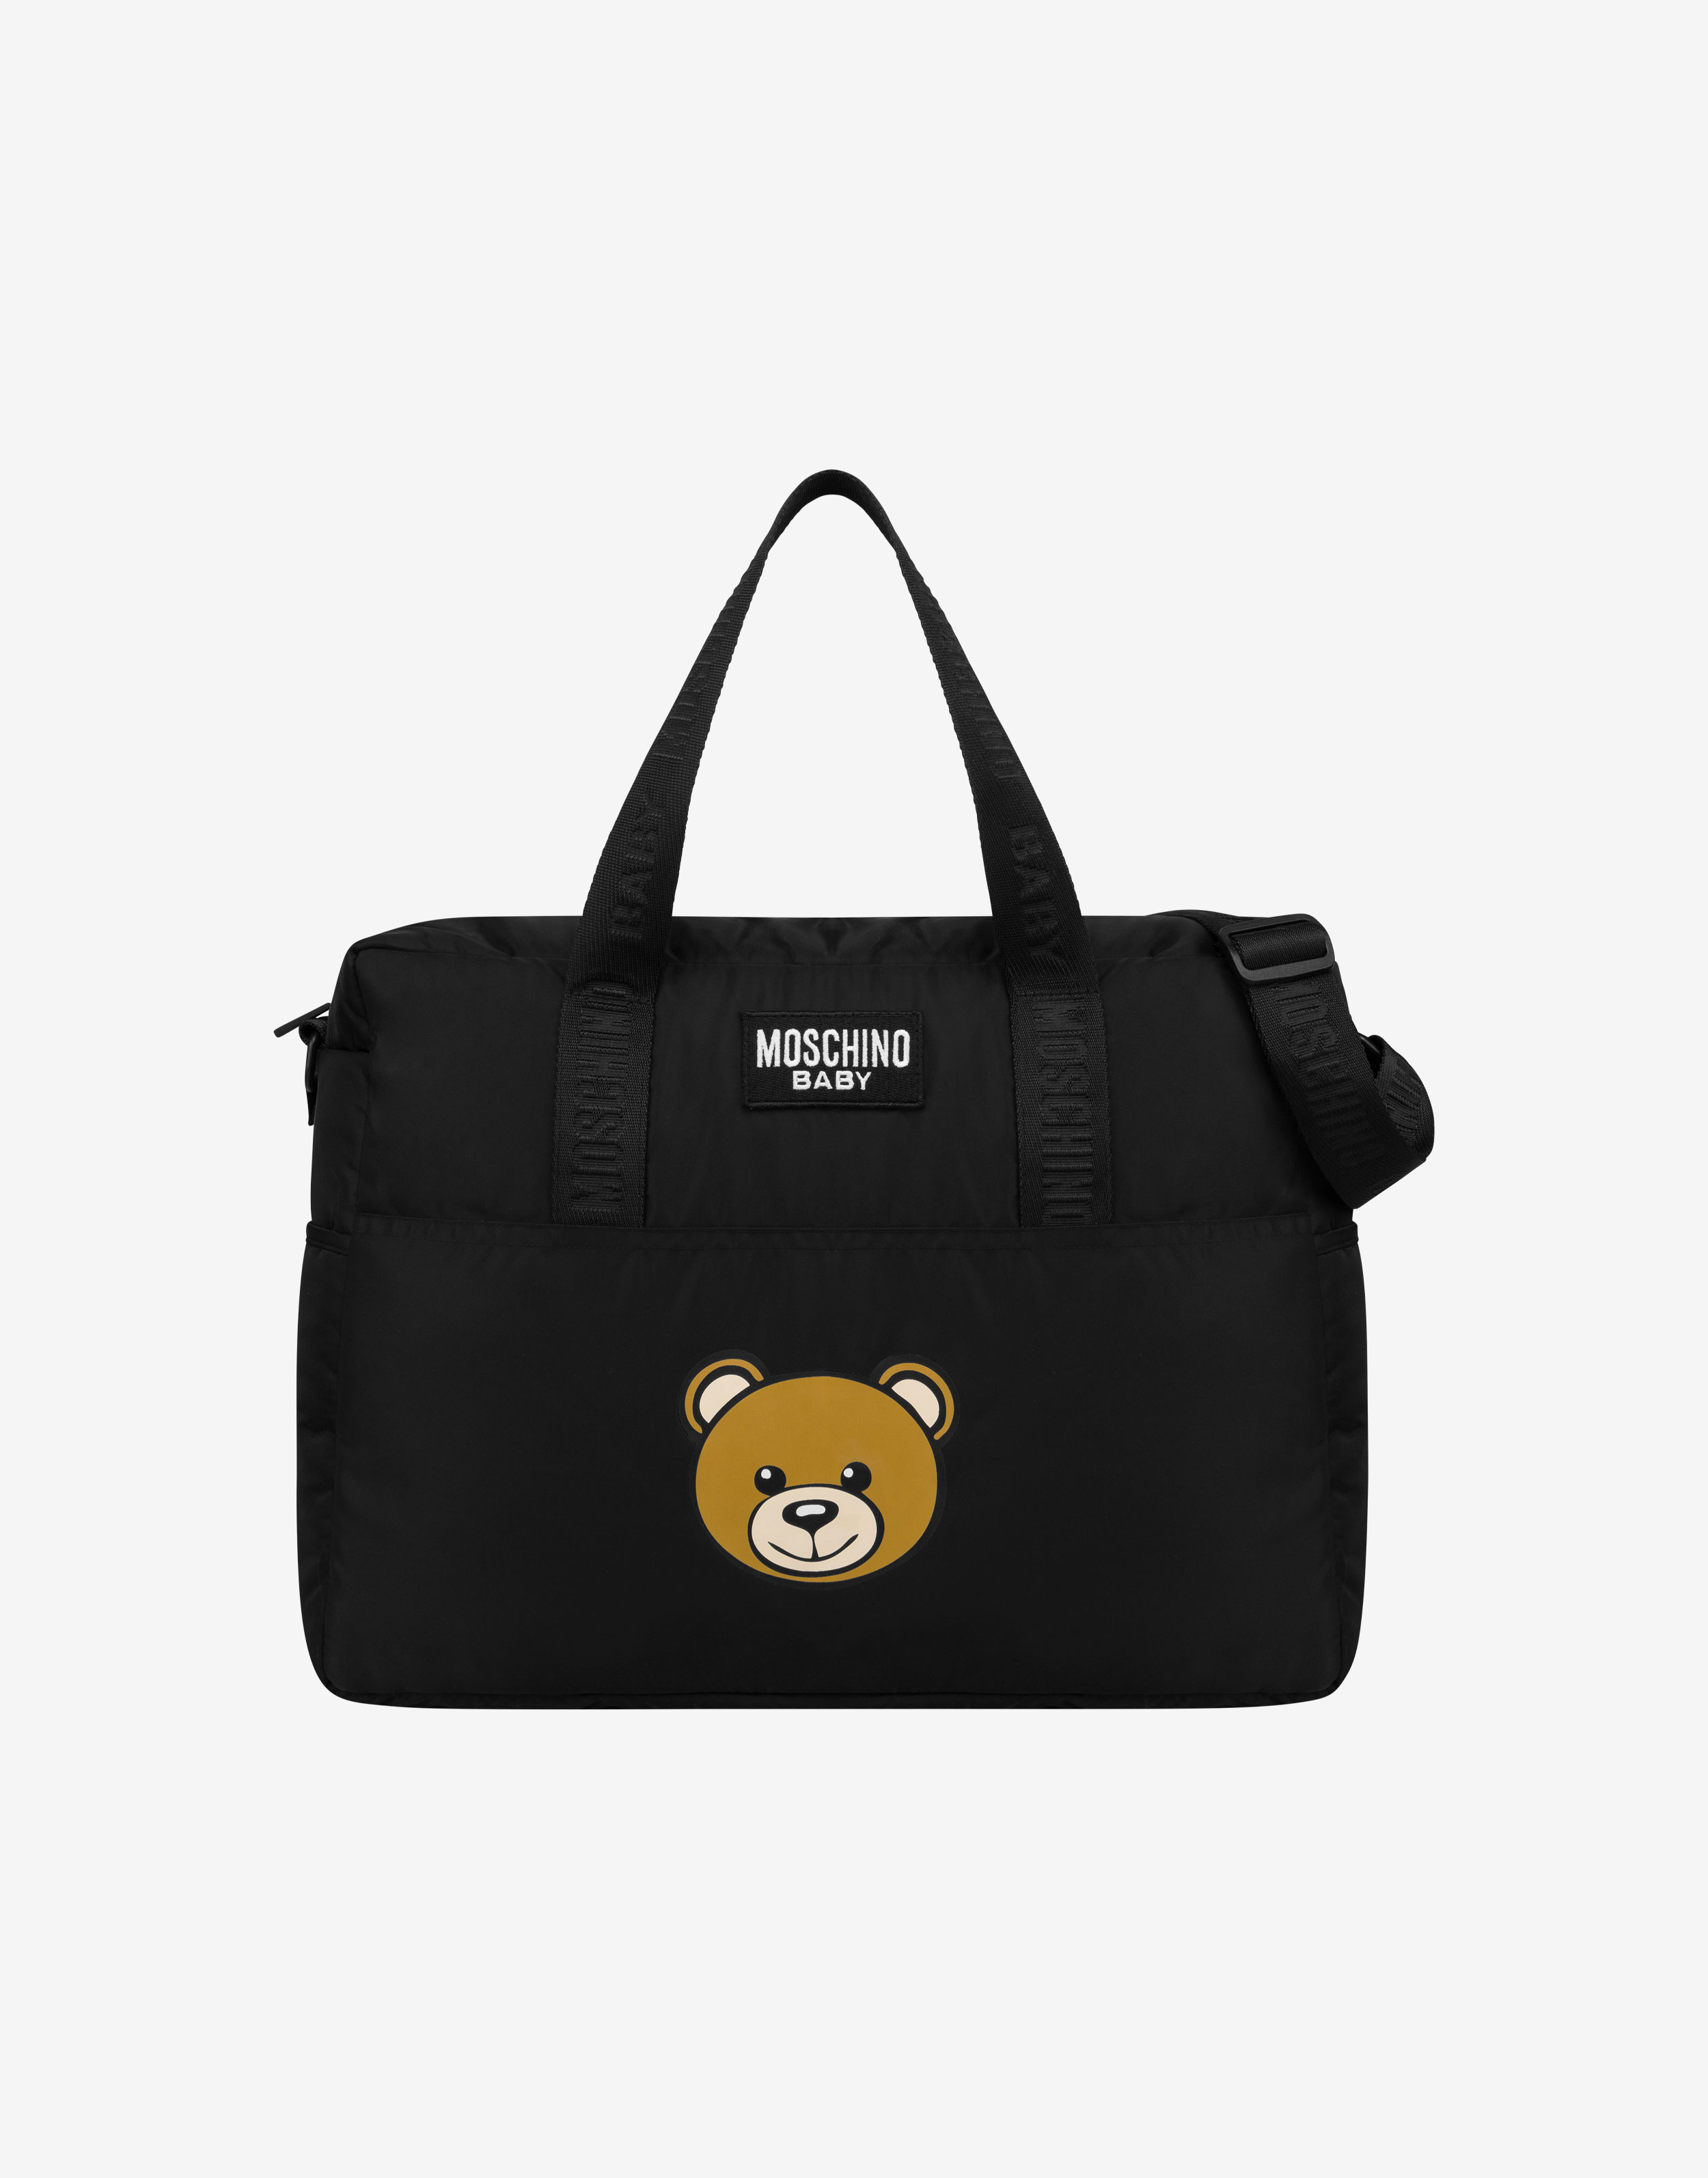 Moschino Teddy Bear Tote Bag in Black